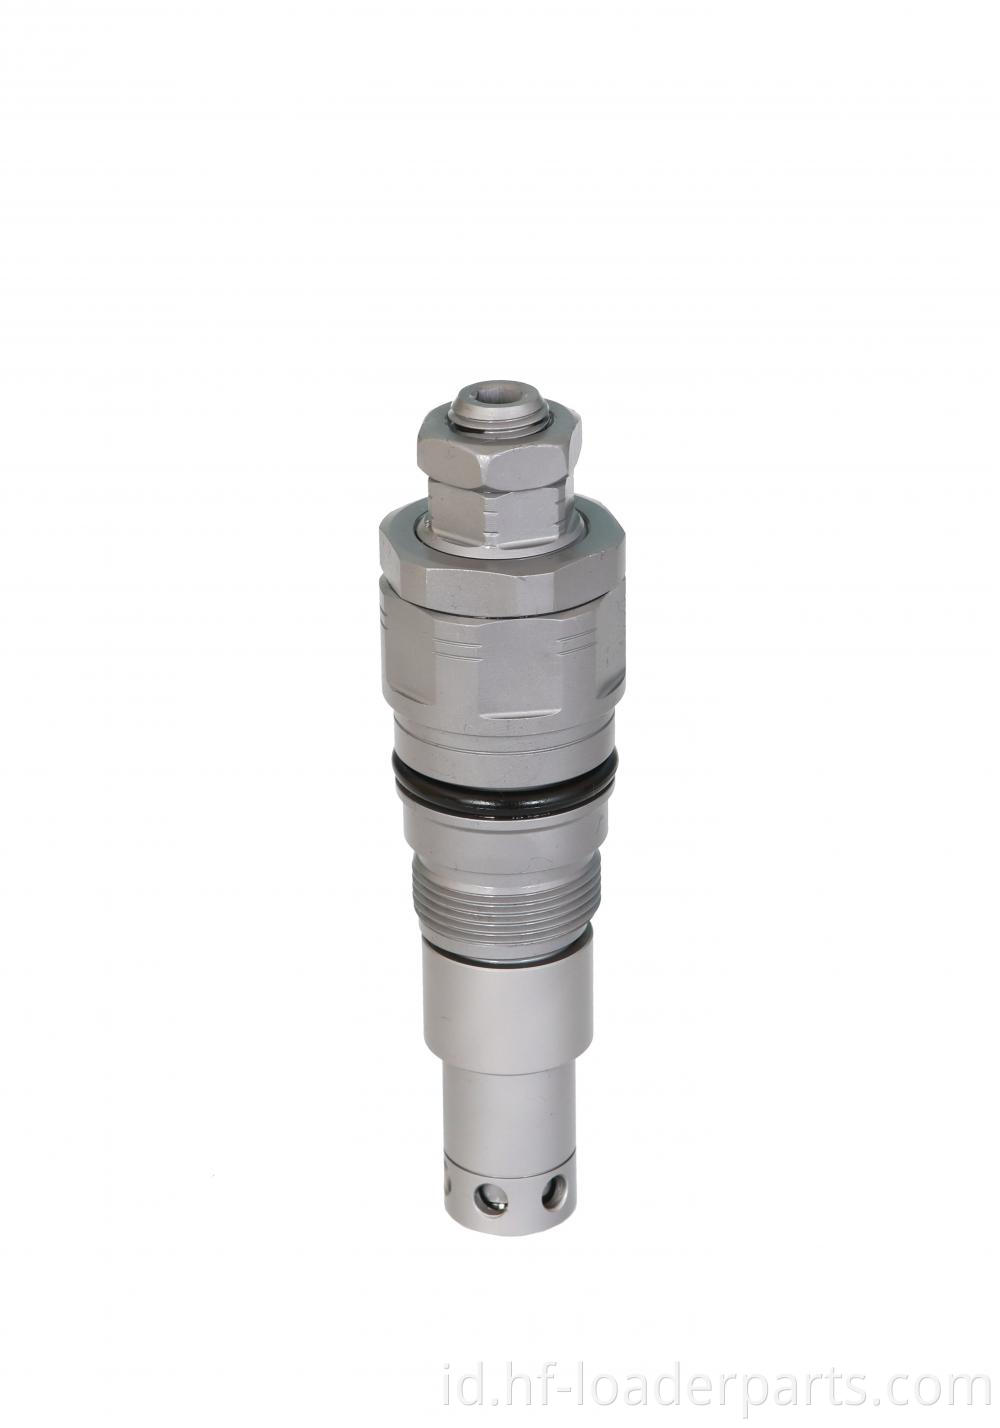 Screw-in, cartridge-style Hydraulic relief valve